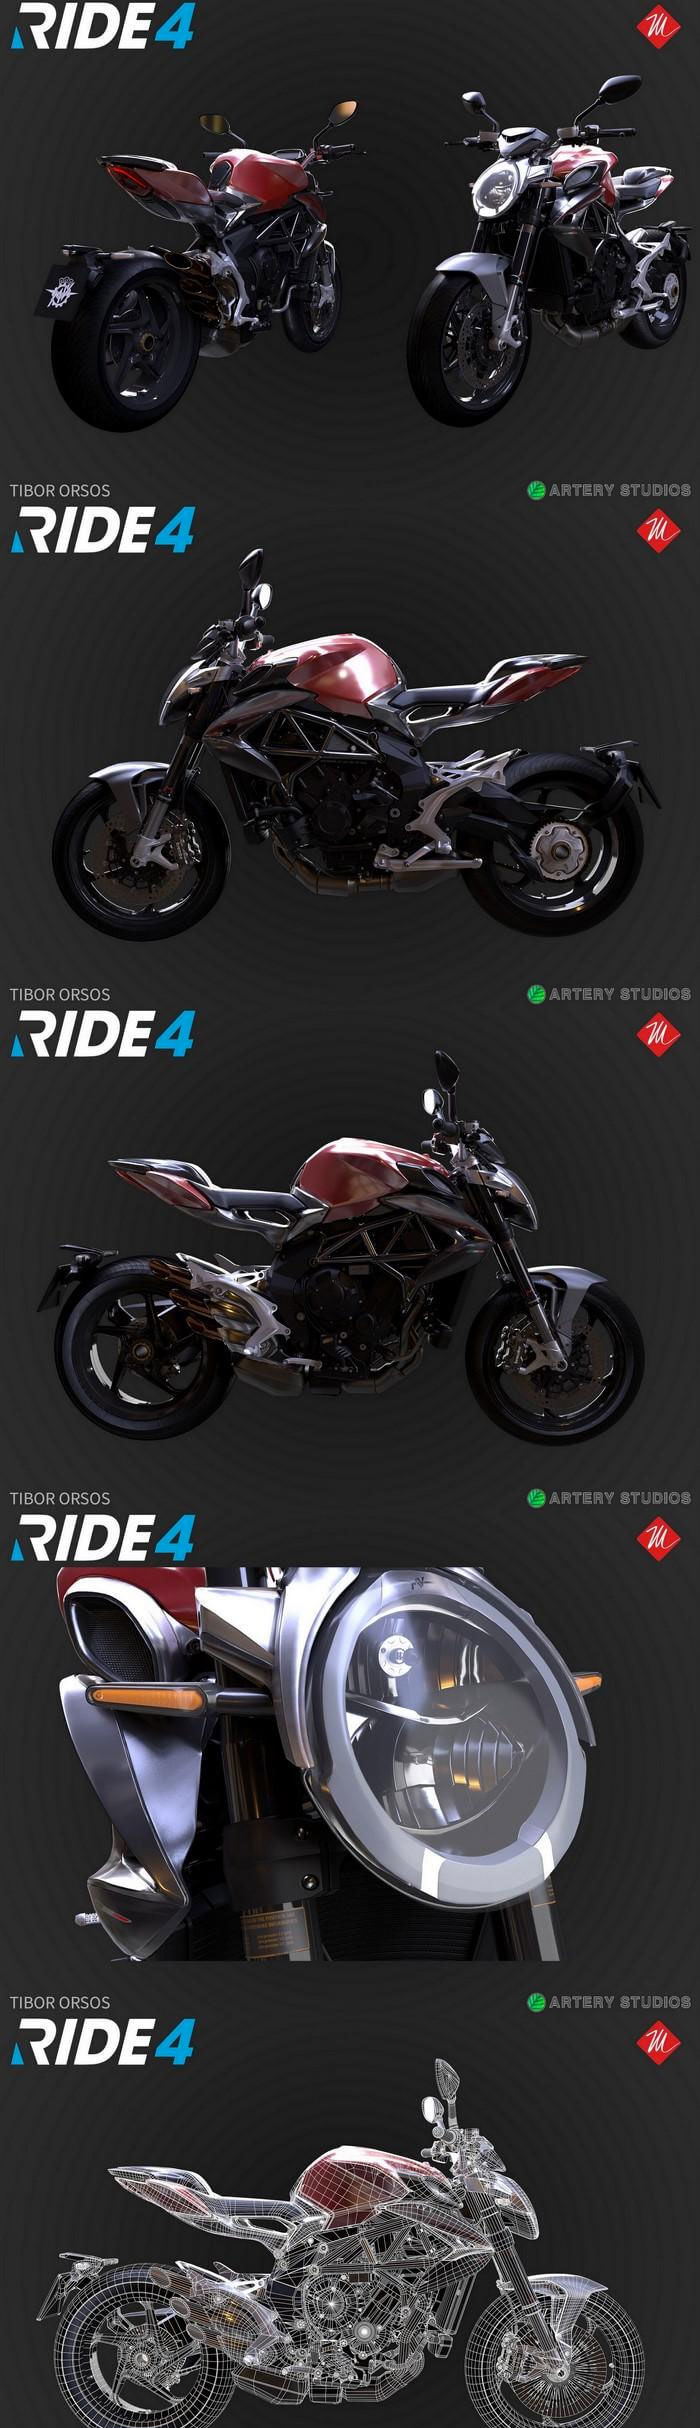 MV AGUSTA Brutale 800 2019 摩托车3D模型下载 (FBX,OBJ,MAX)